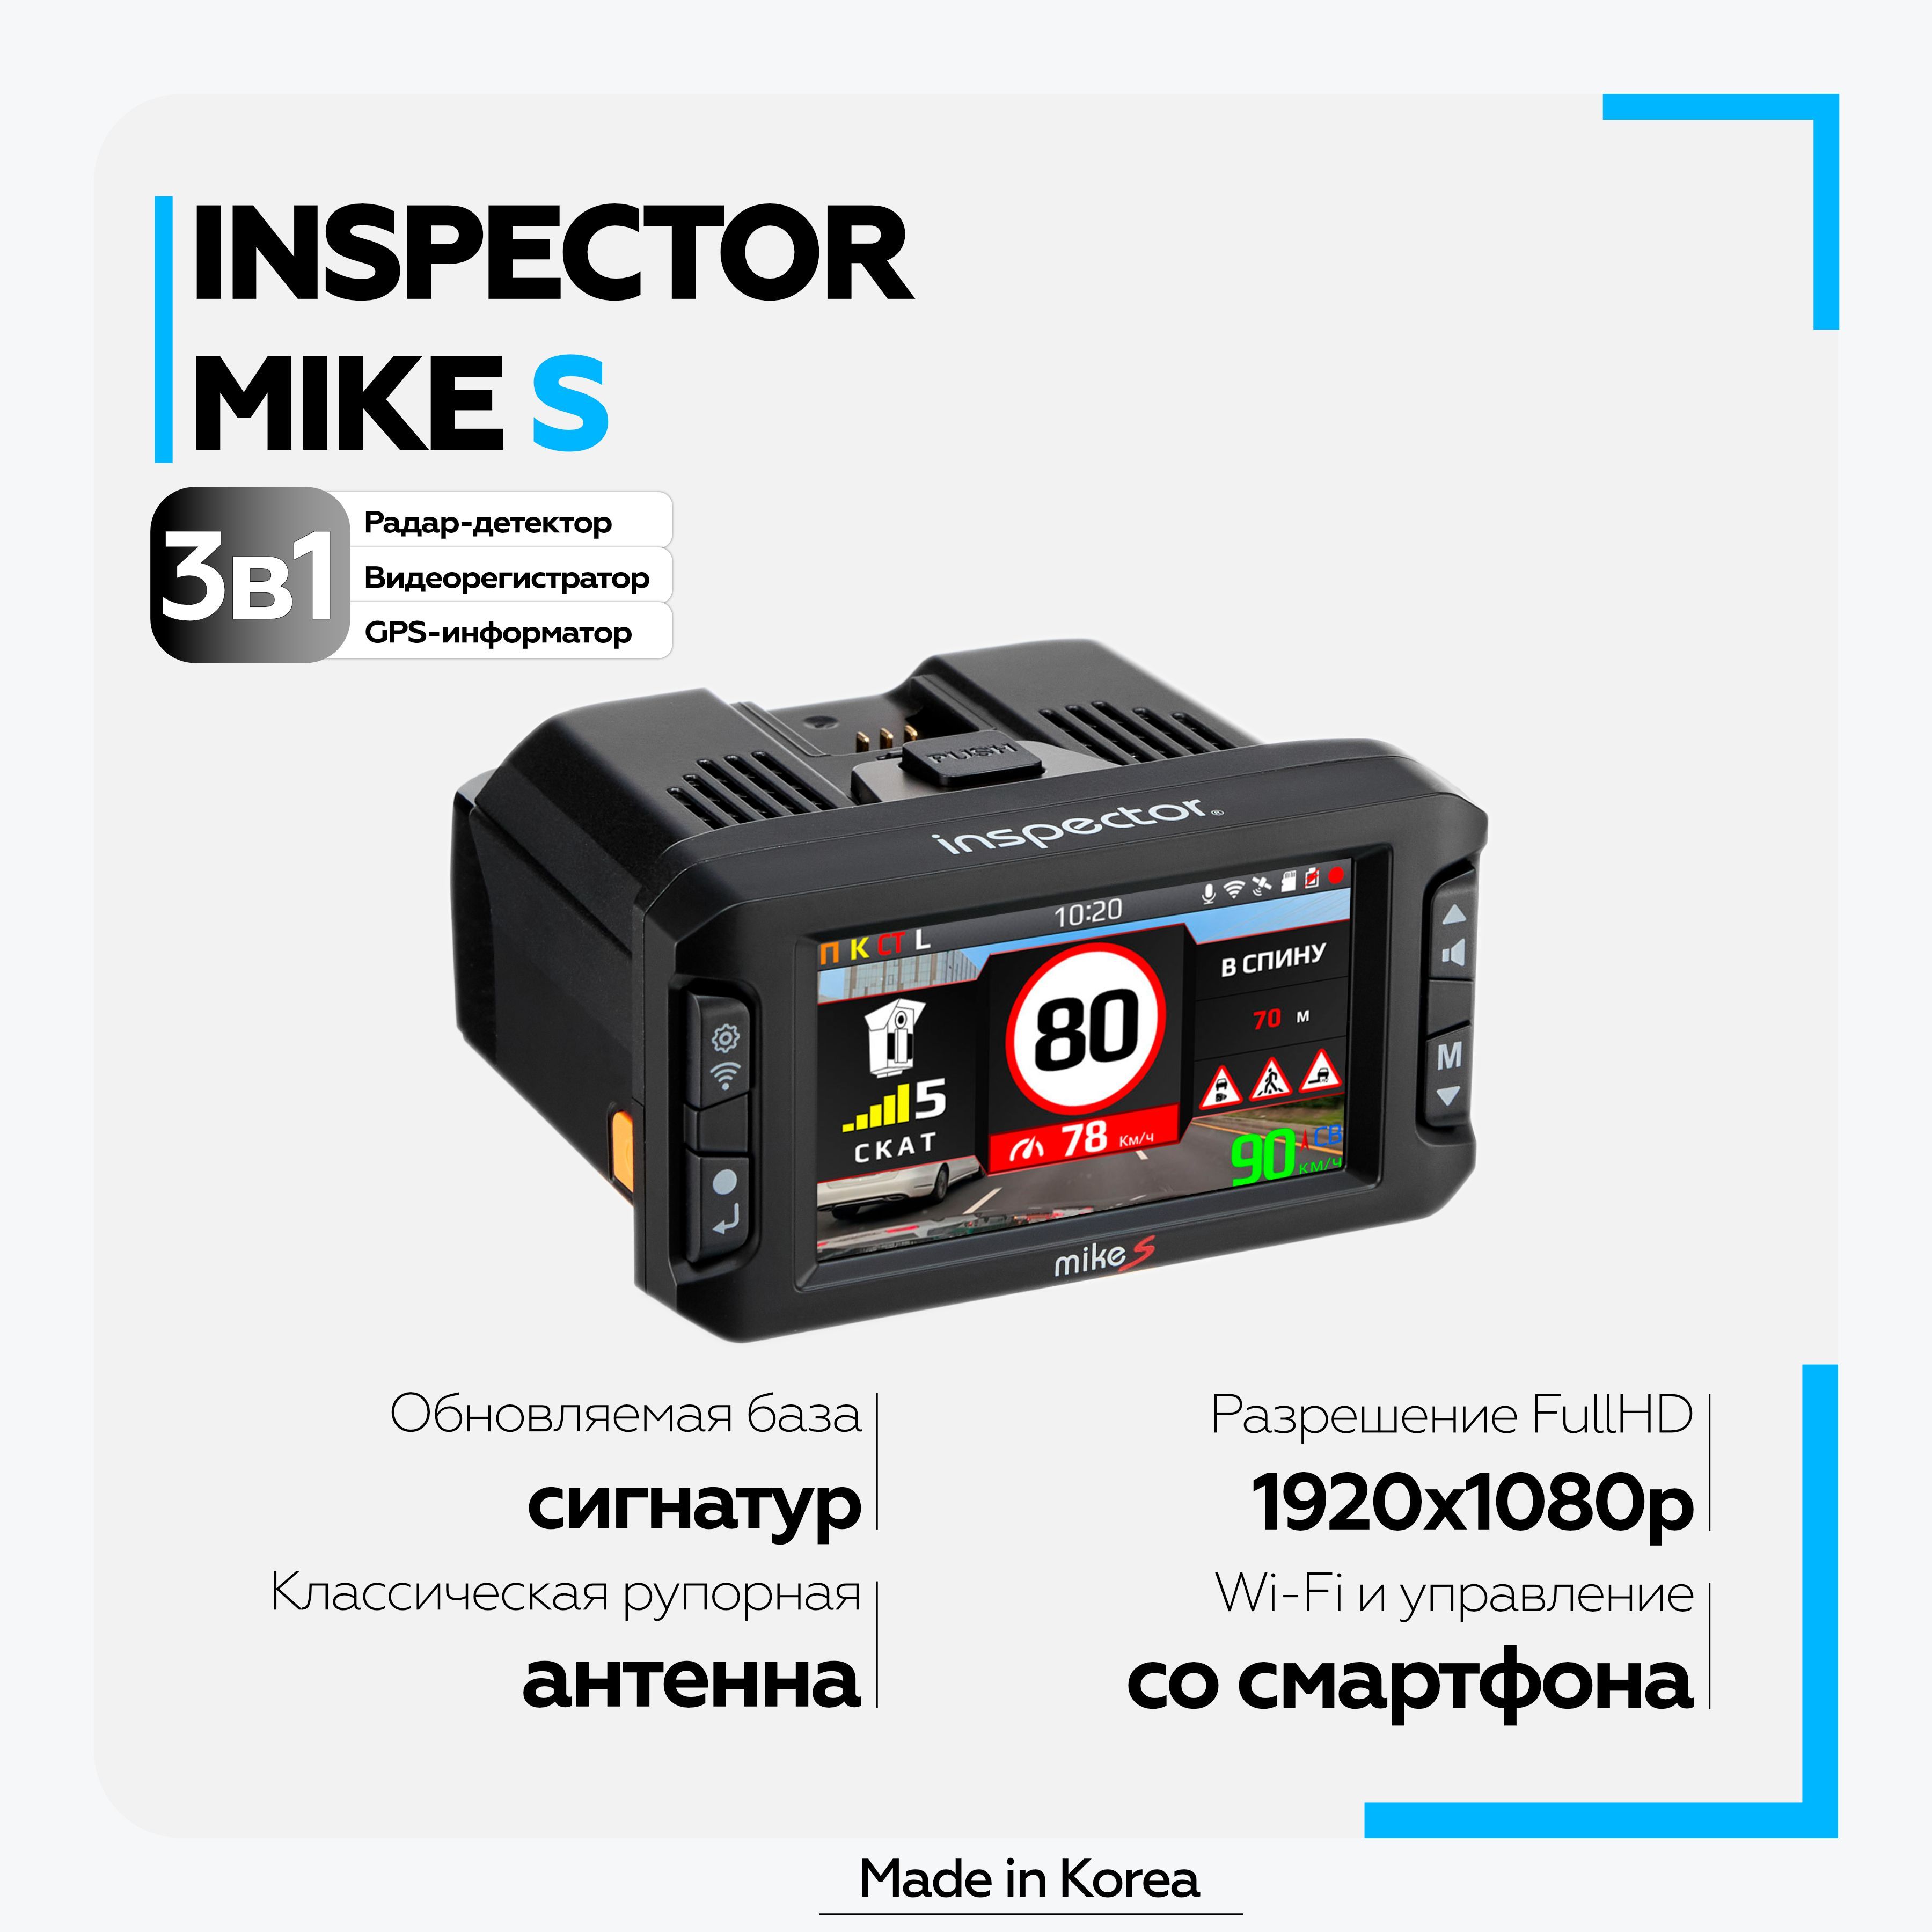 Inspector mikes. Радар-детектор Intego Zircon s.